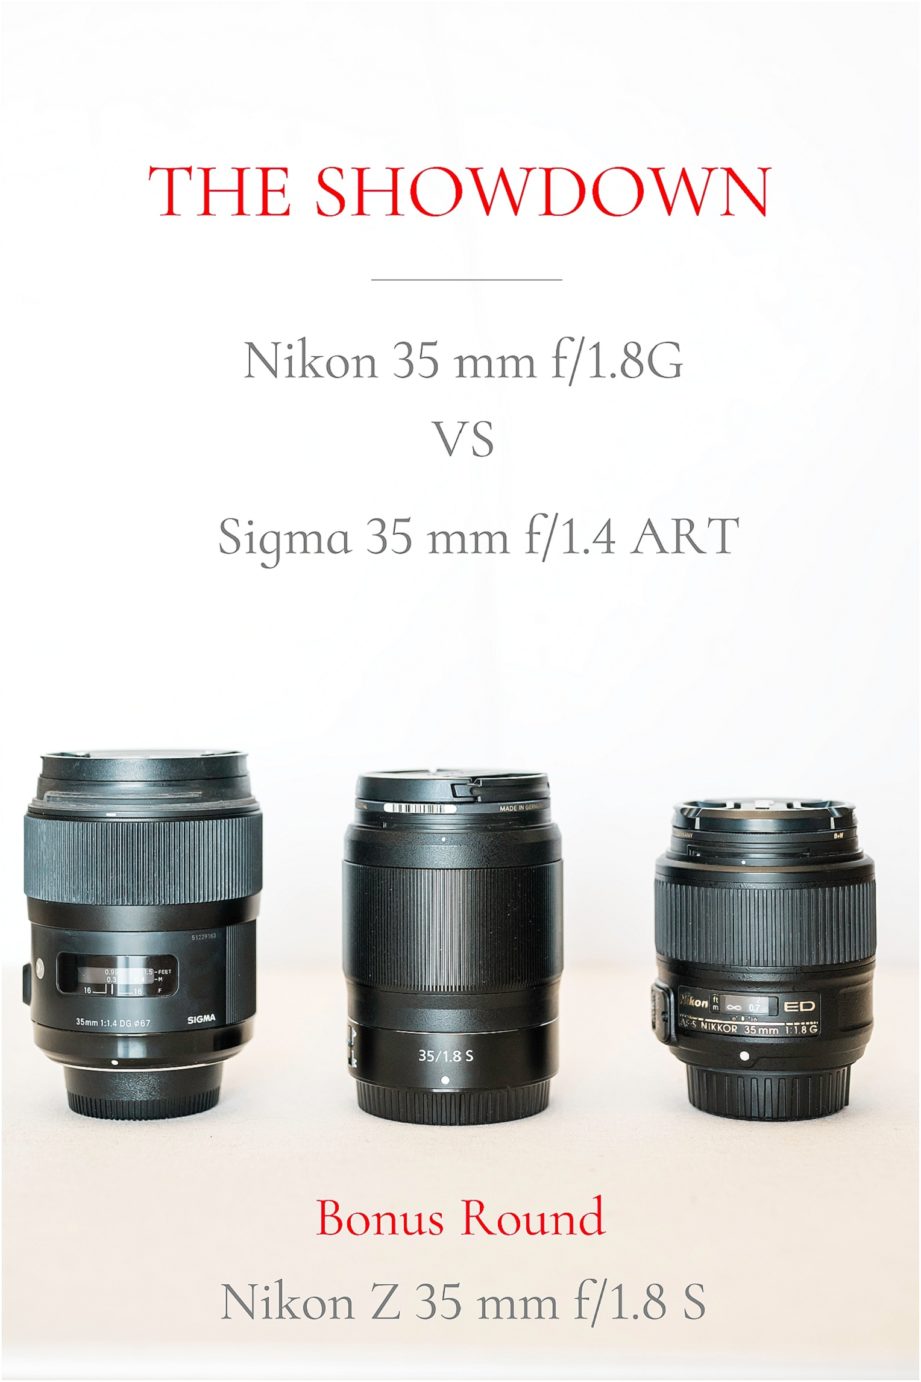 Nikon 35 mm f1.8G vs Sigma 35 mm 1.4 ART showdown featured image